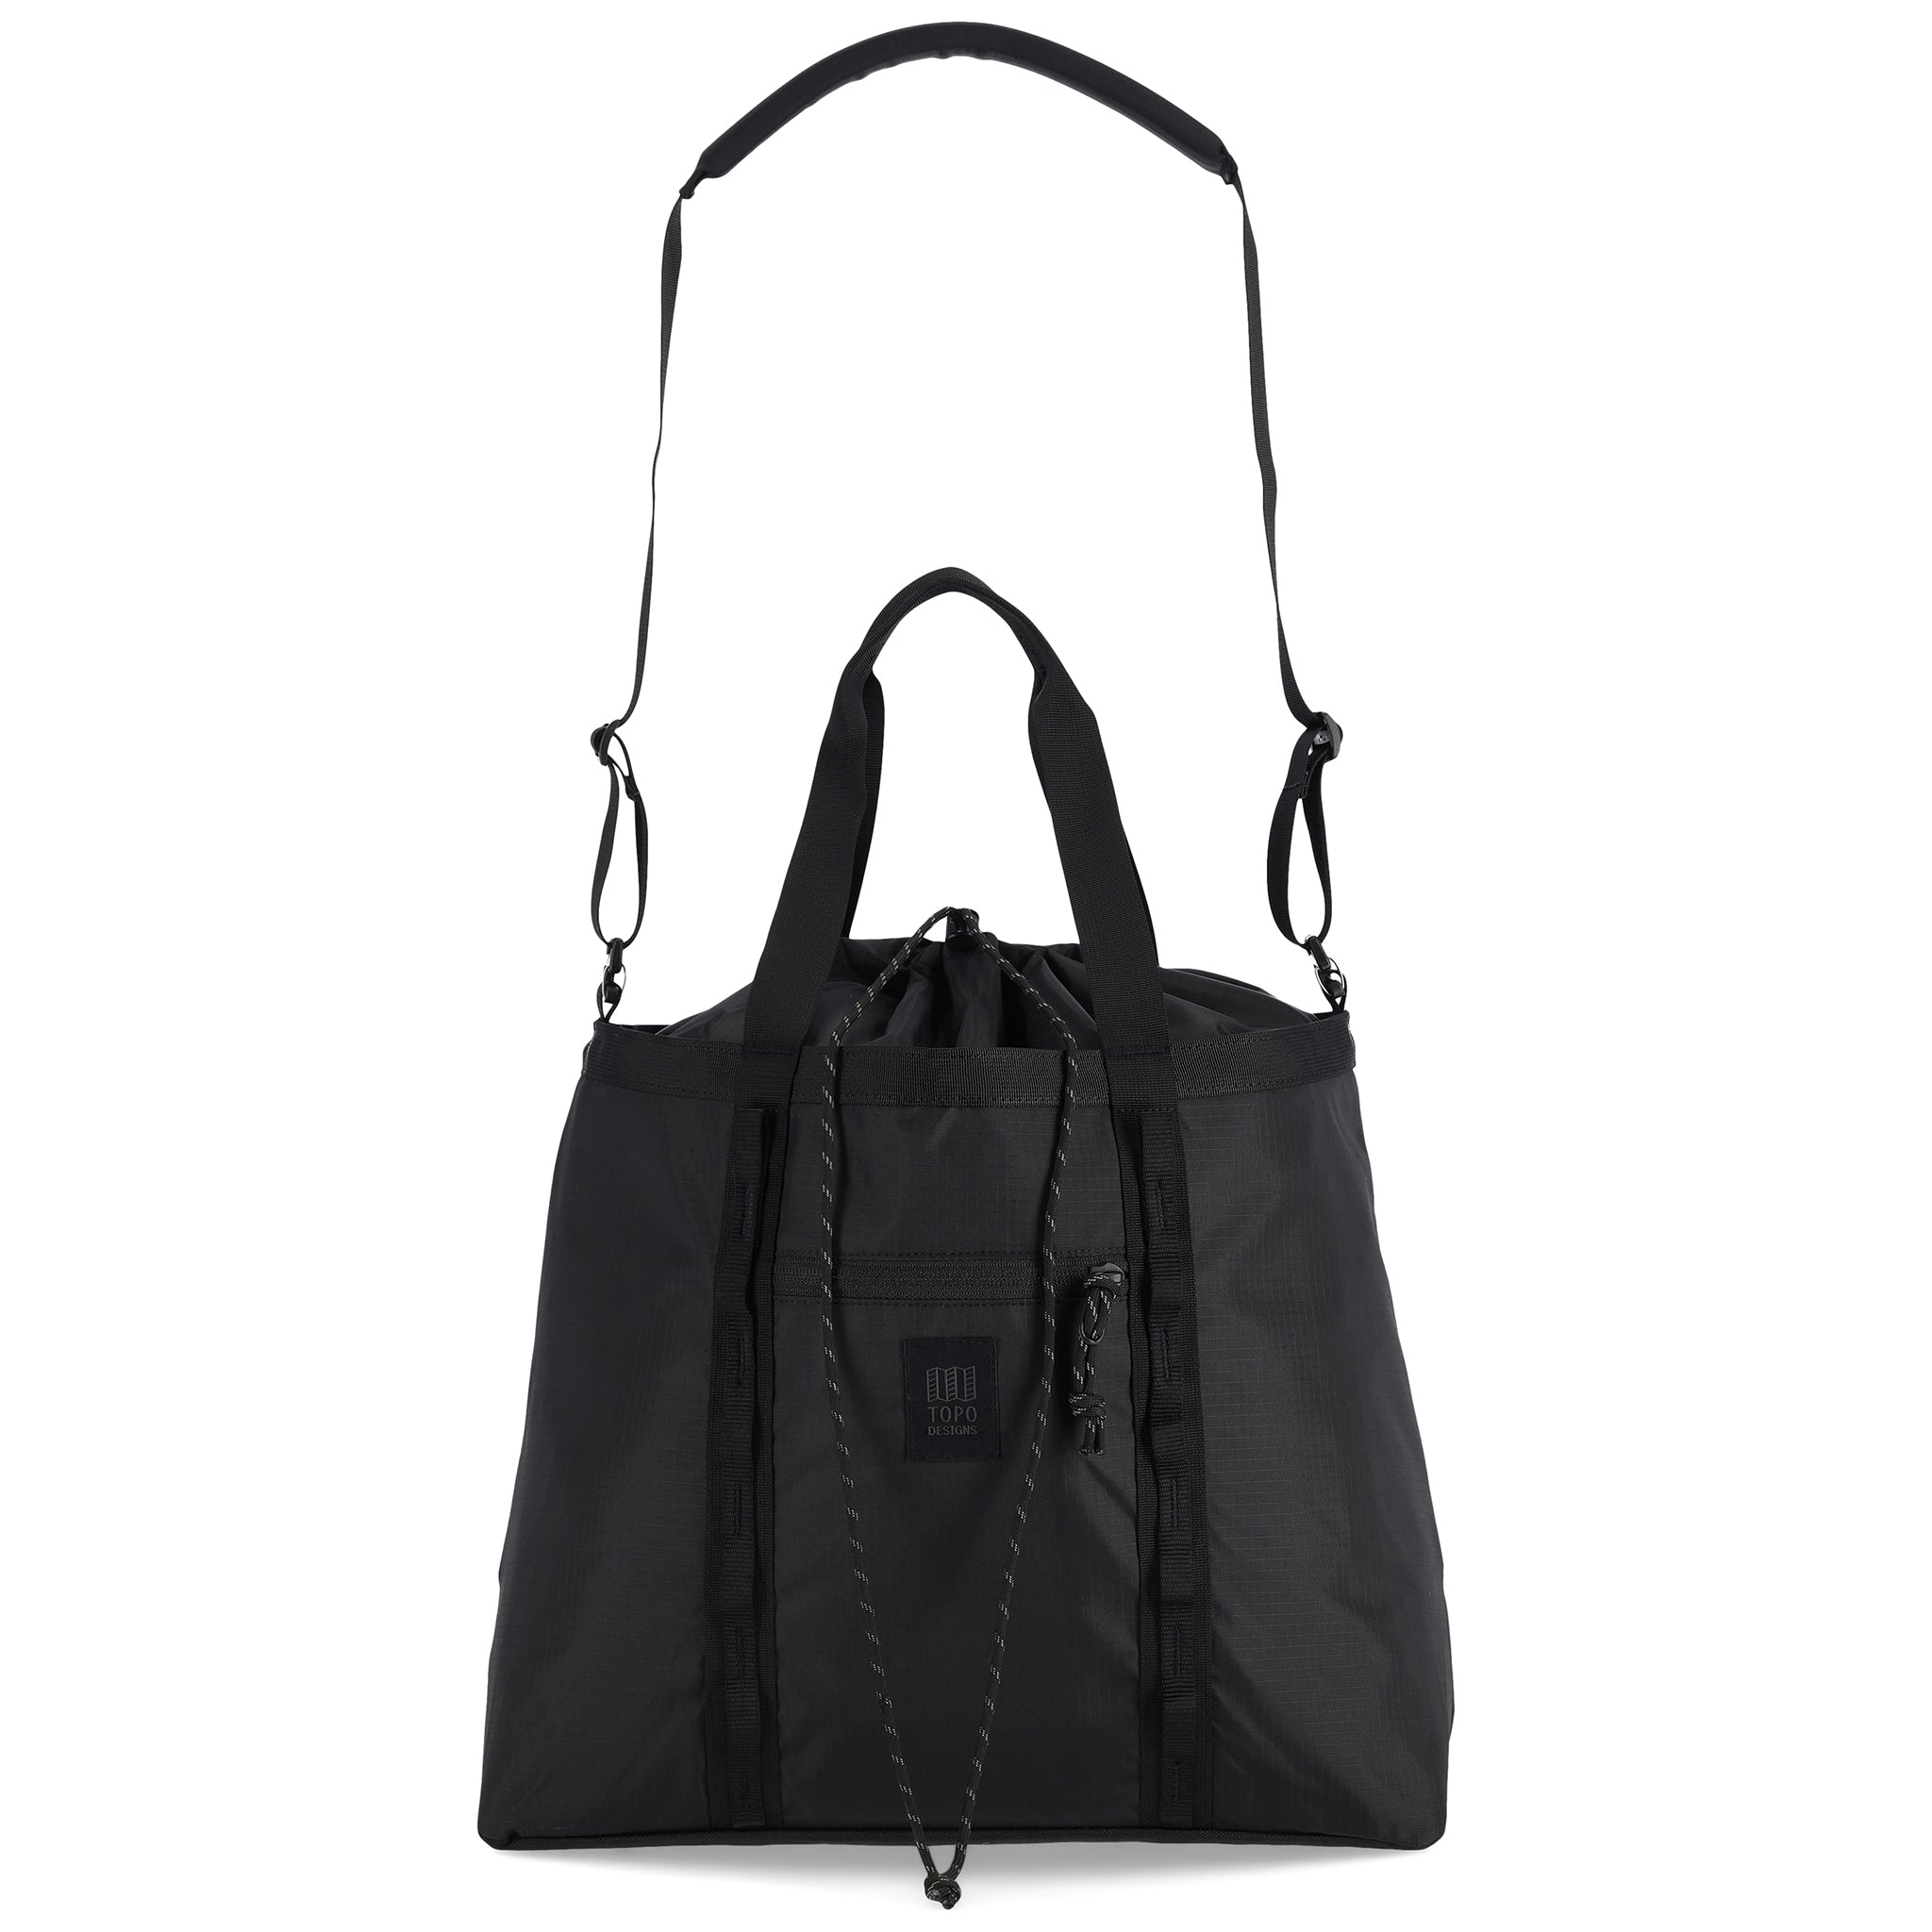 Topo Designs Mountain Utility Tote Bag hauler in lightweight recycled "Black" nylon.